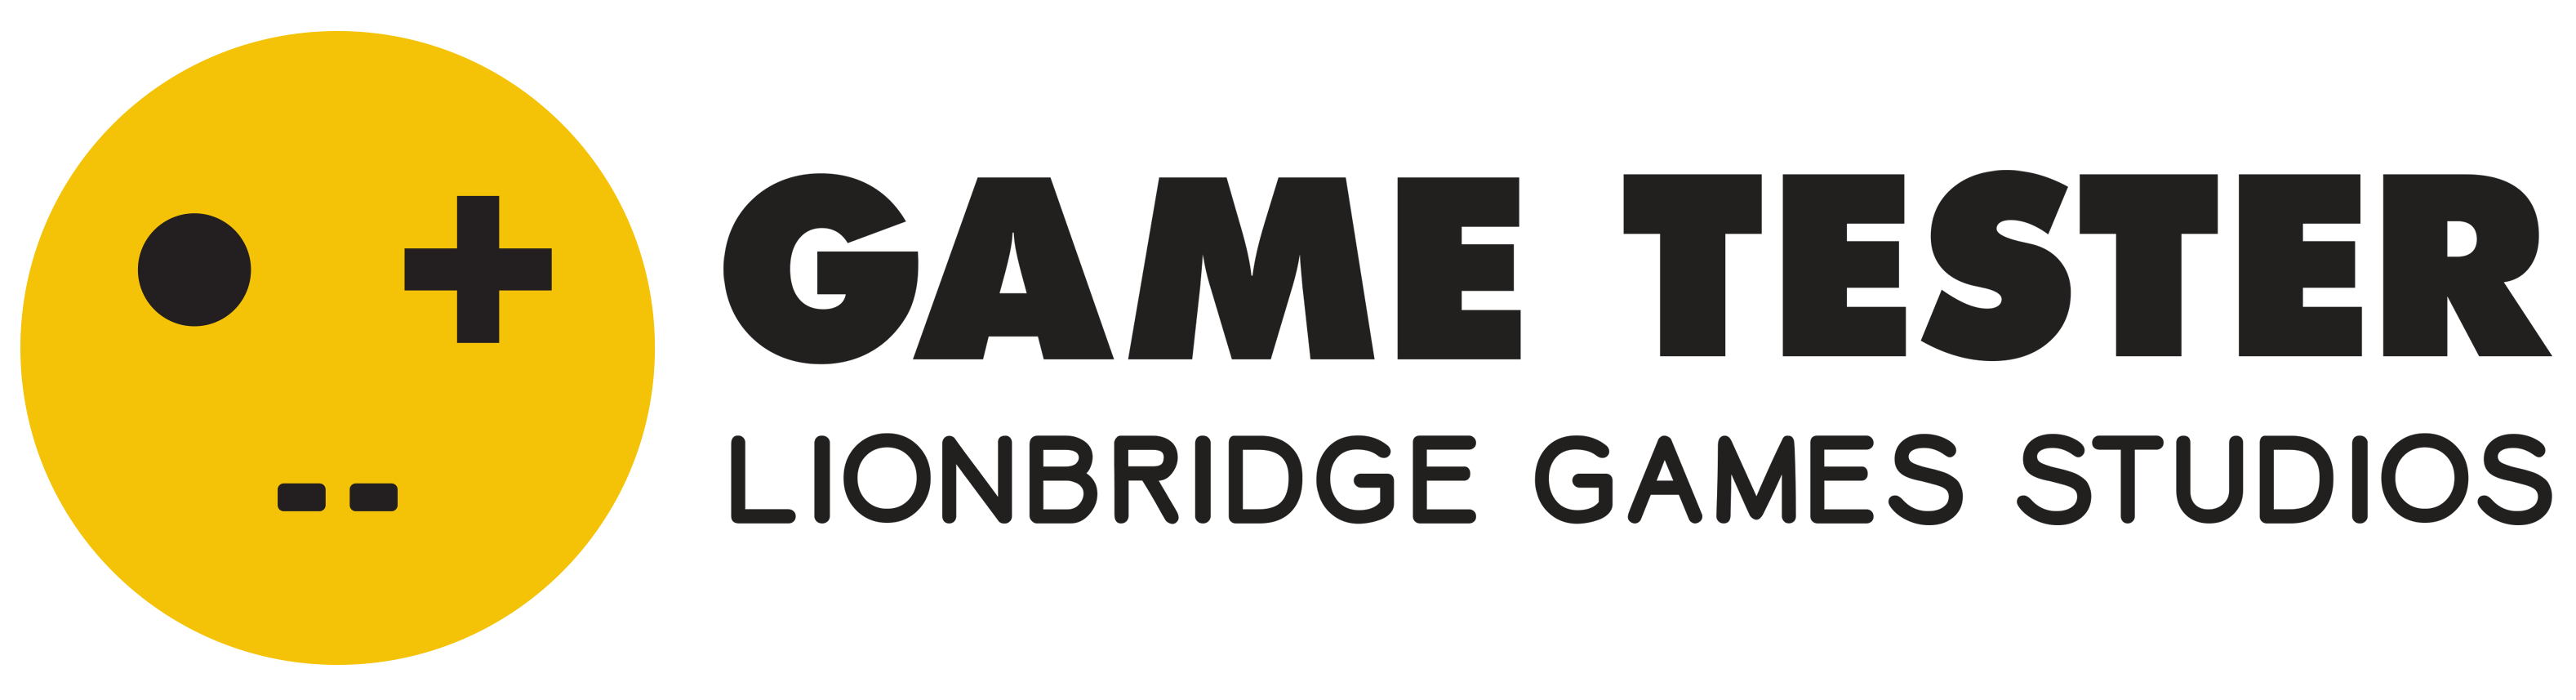 Lionbridge/Gametester logo